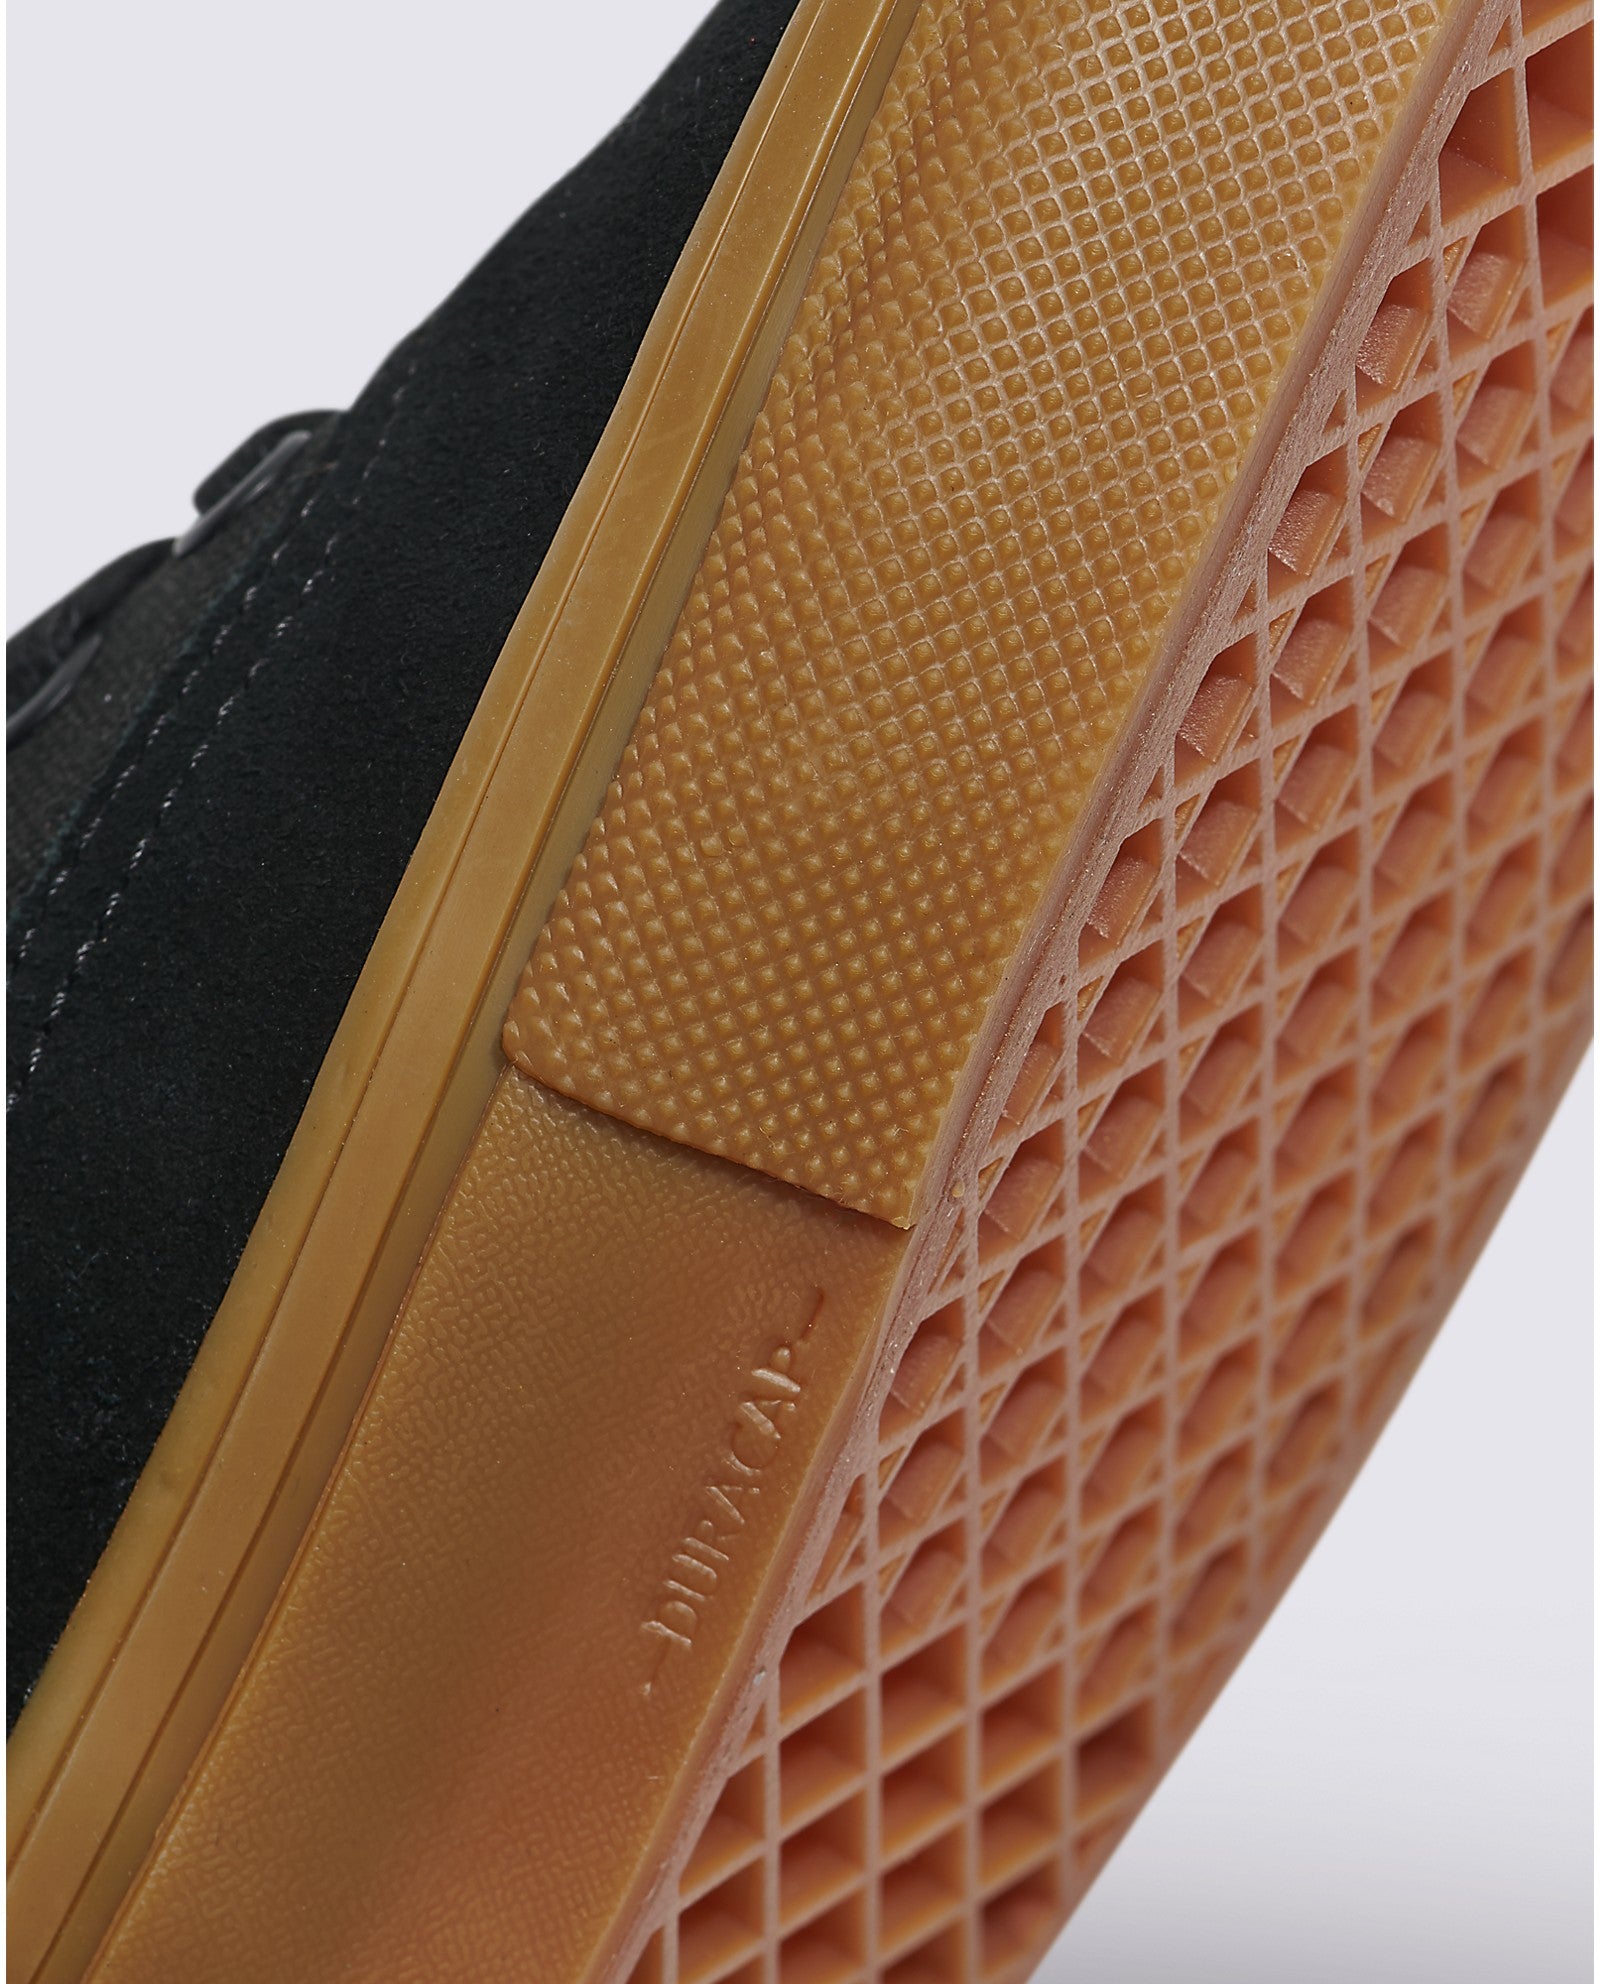 Black/Gum Vans Skate Authentic Skate Shoe Detail